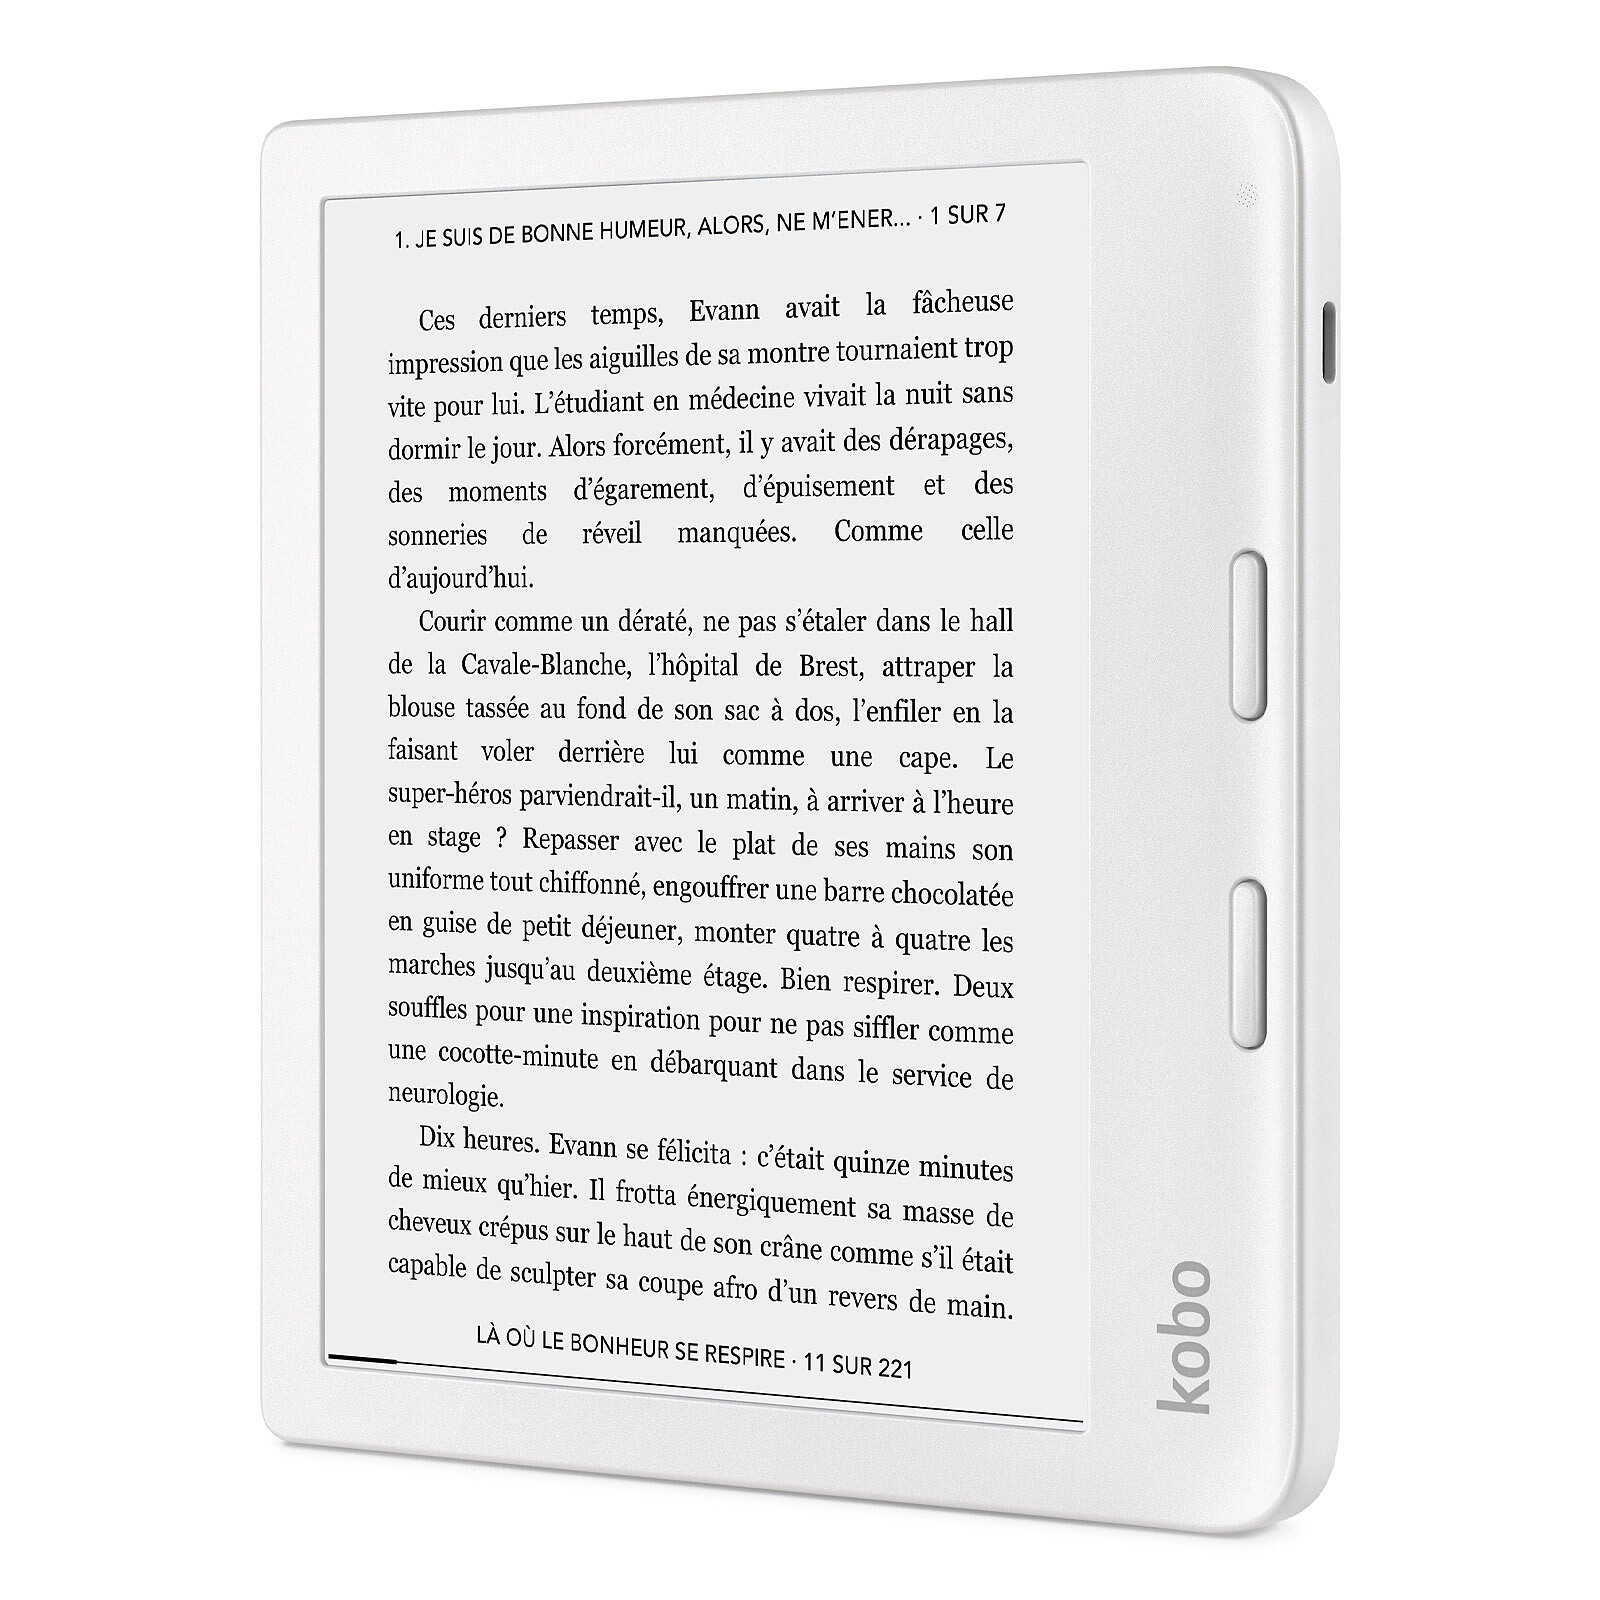 Kobo Libra 2 Blanc - Liseuse eBook - Garantie 3 ans LDLC